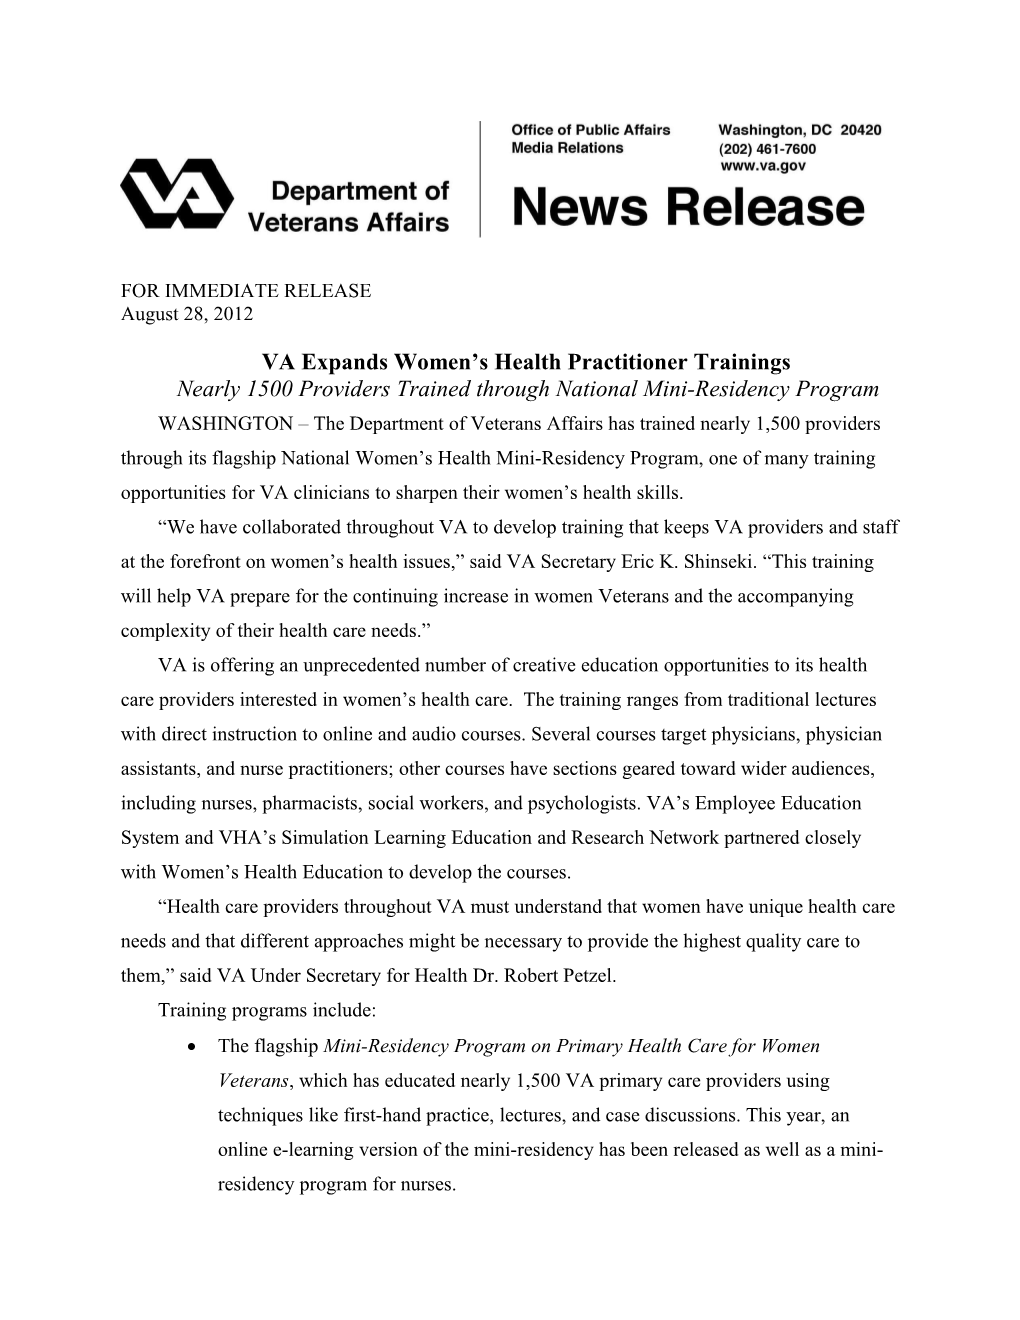 VA Expands Women S Health Practitioner Trainings